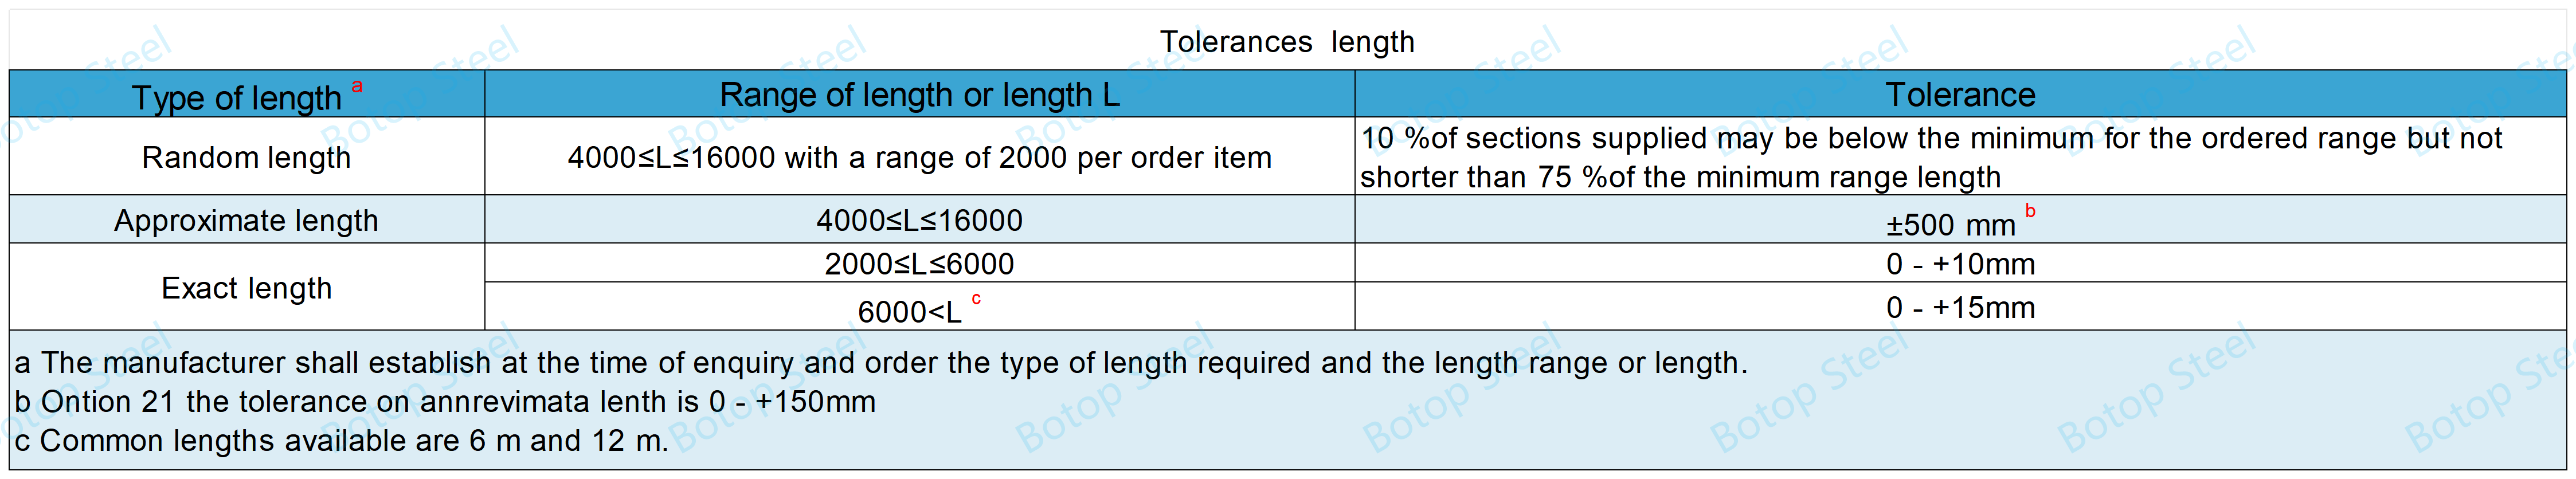 BS EN 10210 Tolerances  length